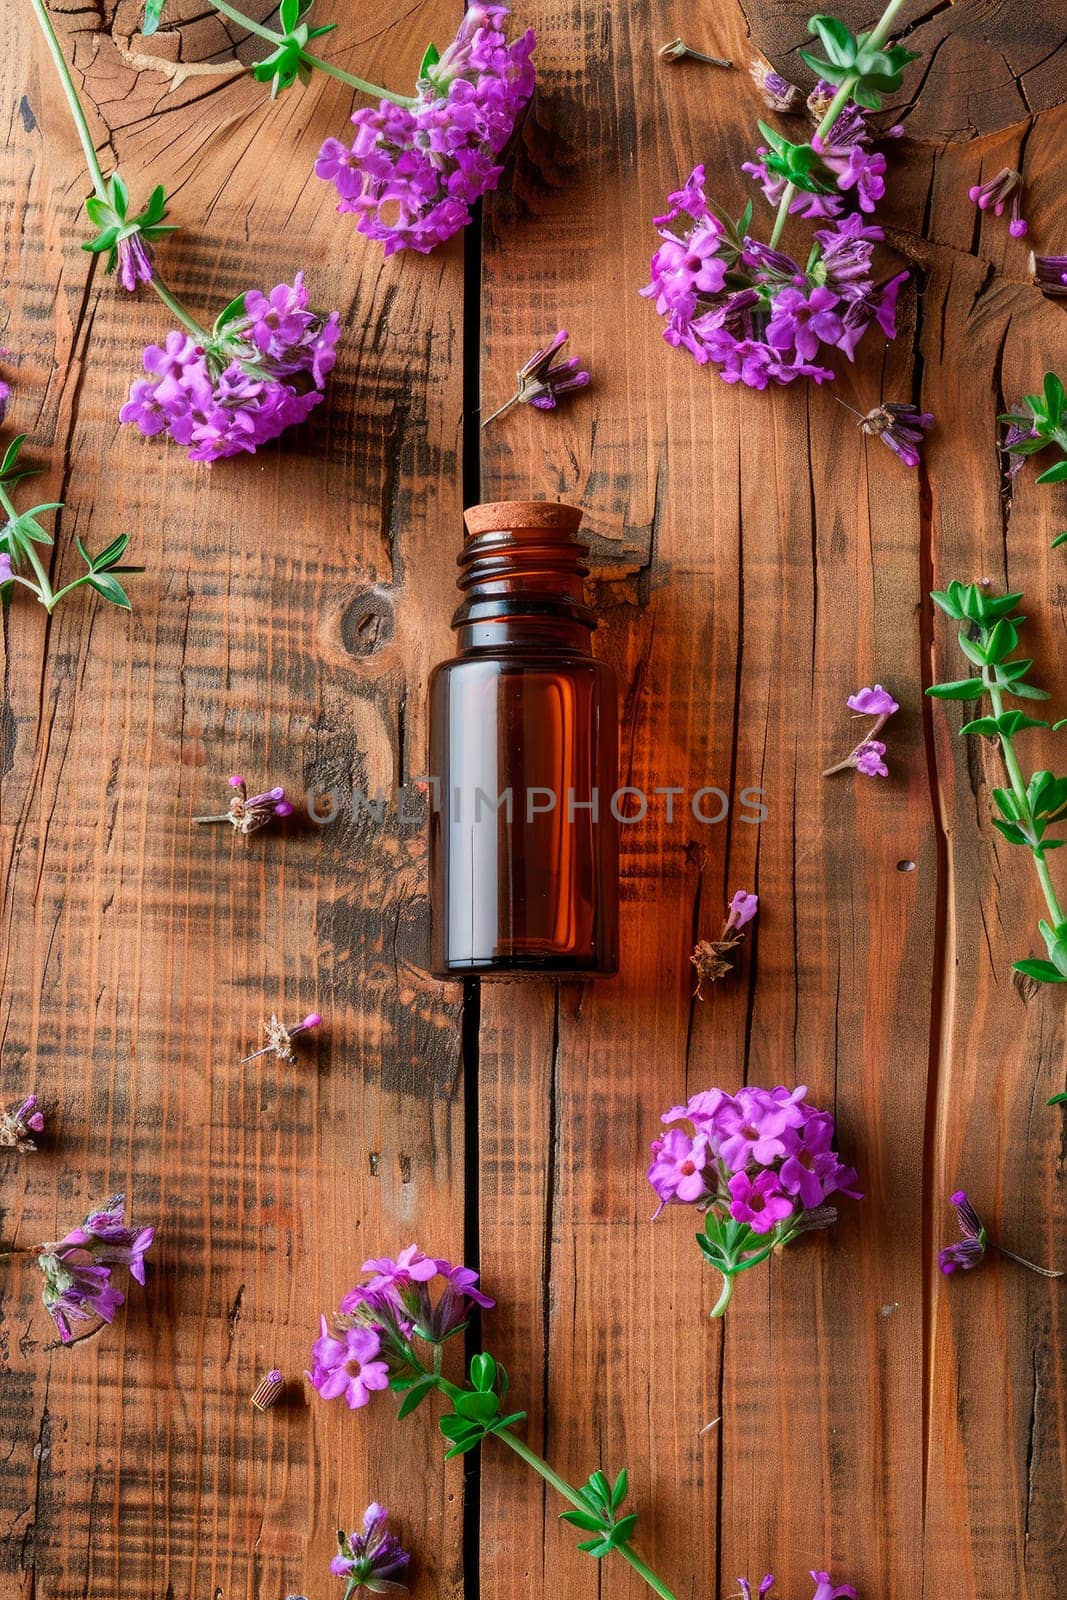 verbena essential oil in a bottle. selective focus. by yanadjana